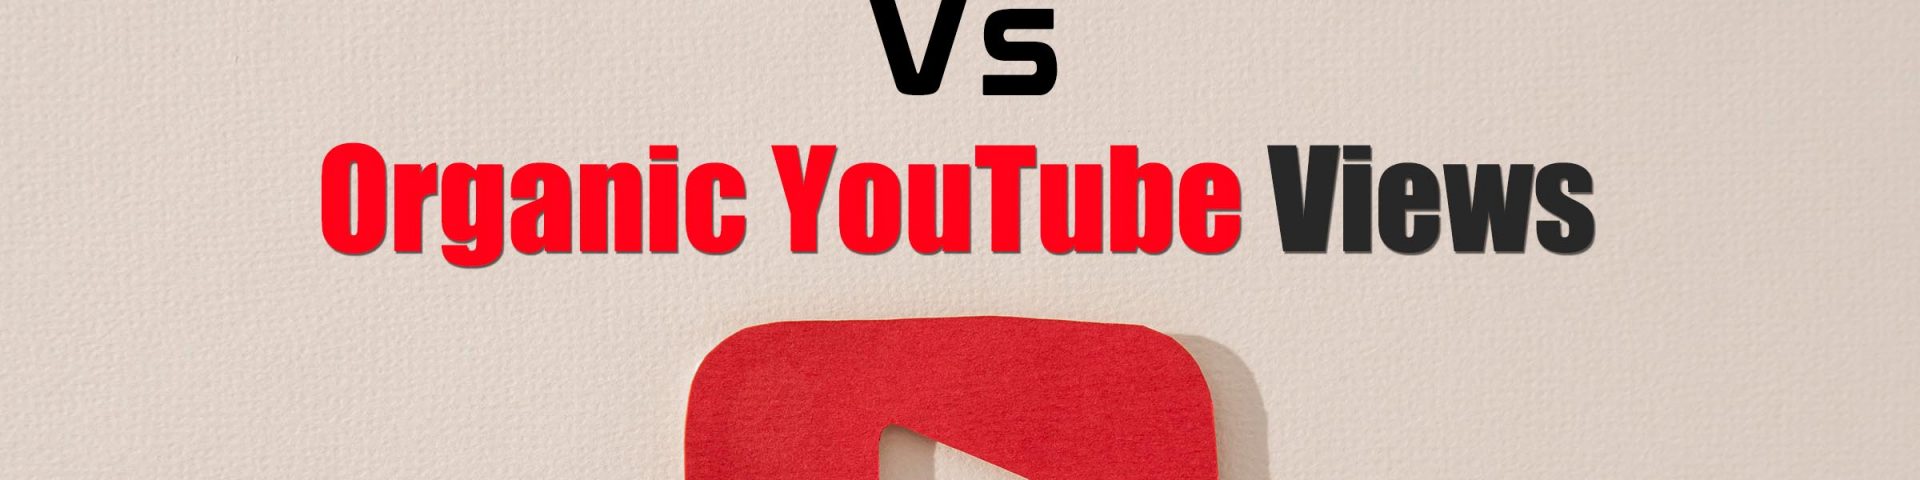 Buy YouTube Views Vs Organic YouTube Views